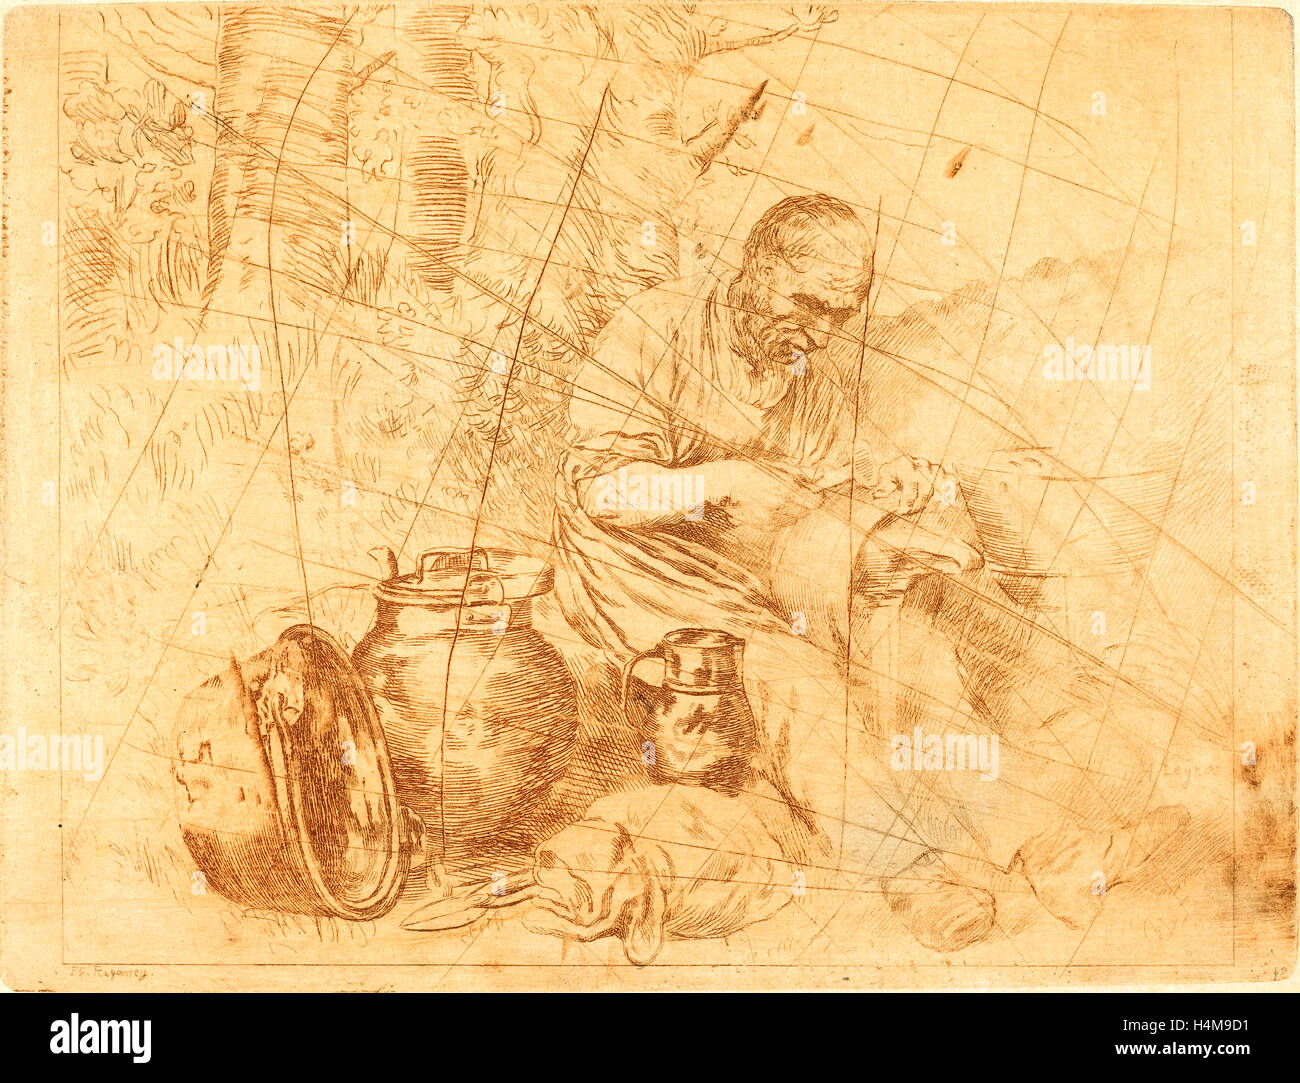 Felix Régamey nach Alphonse Legros, The Tinker (Le Retameur), Französisch, 1844-1907, Radierung in braun [Stornierung Beweis] Stockfoto